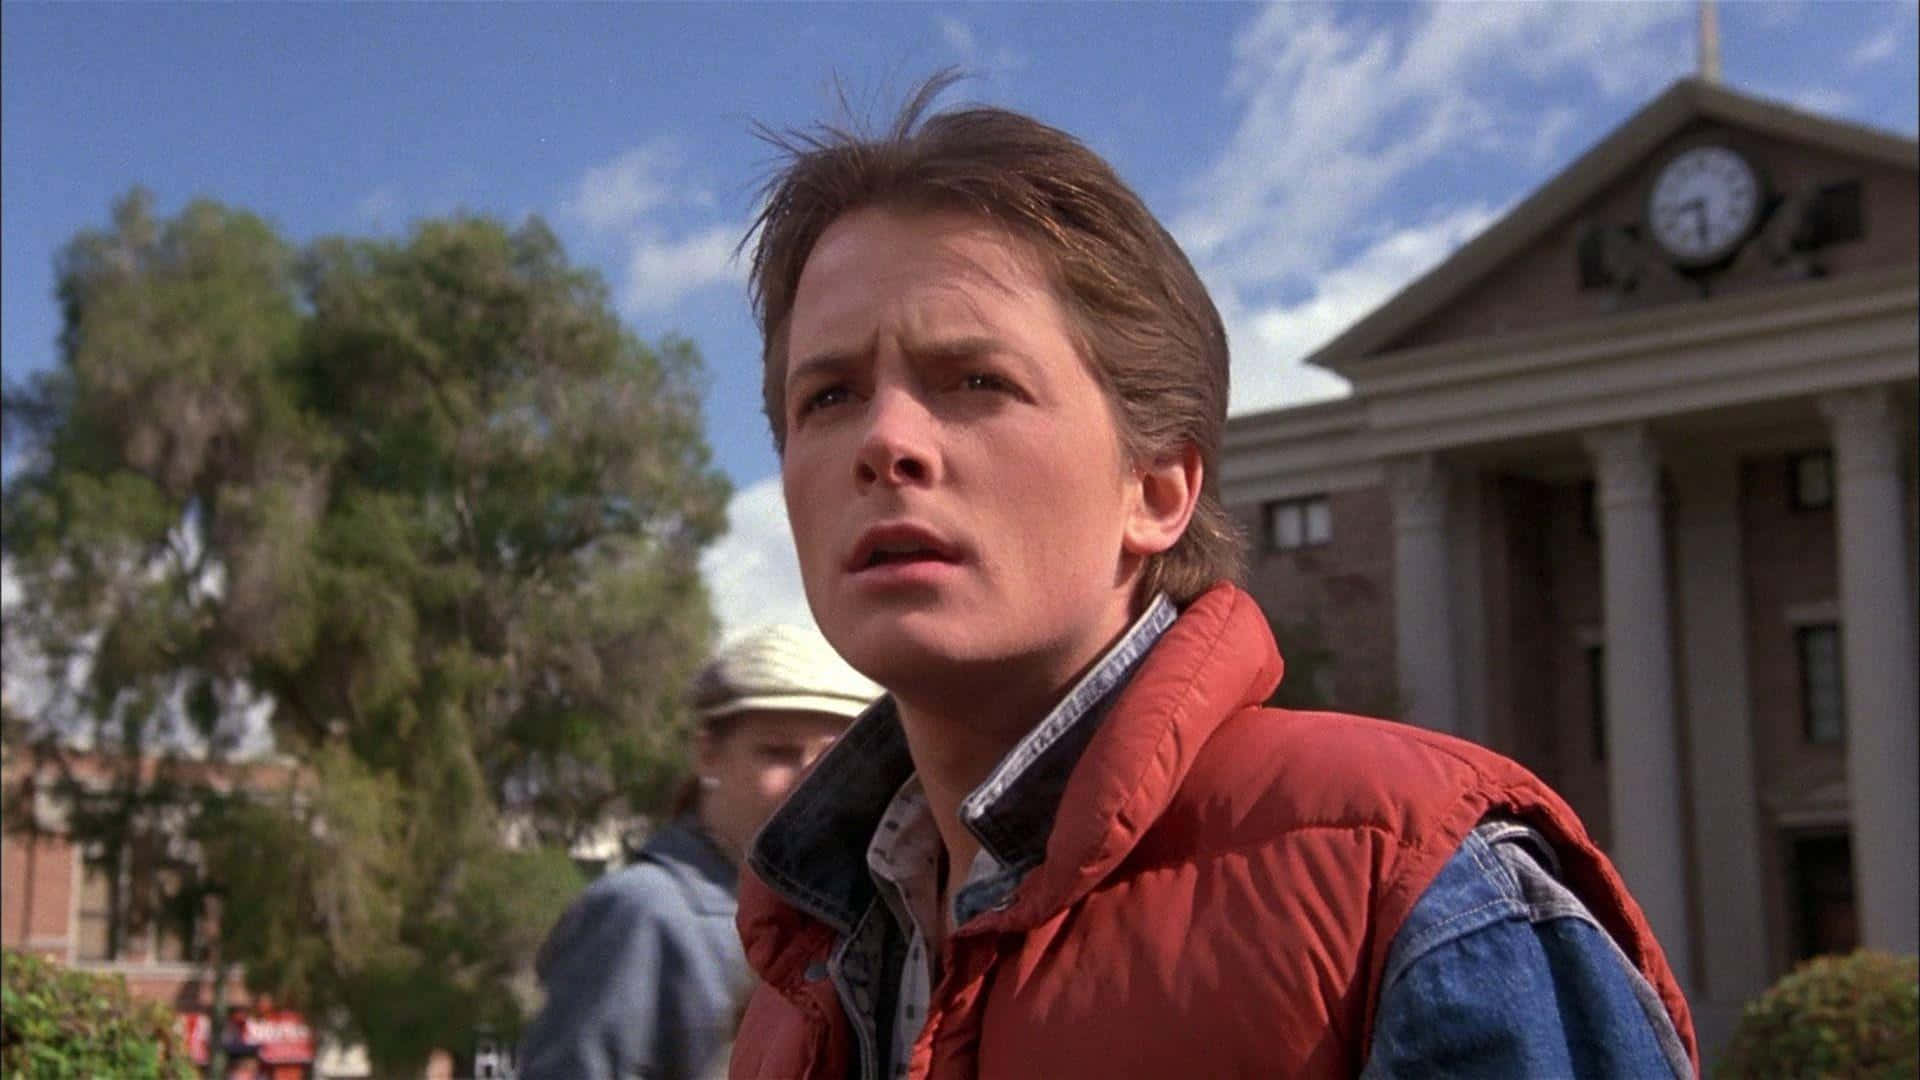 - Michael J. Fox, World-renowned Actor